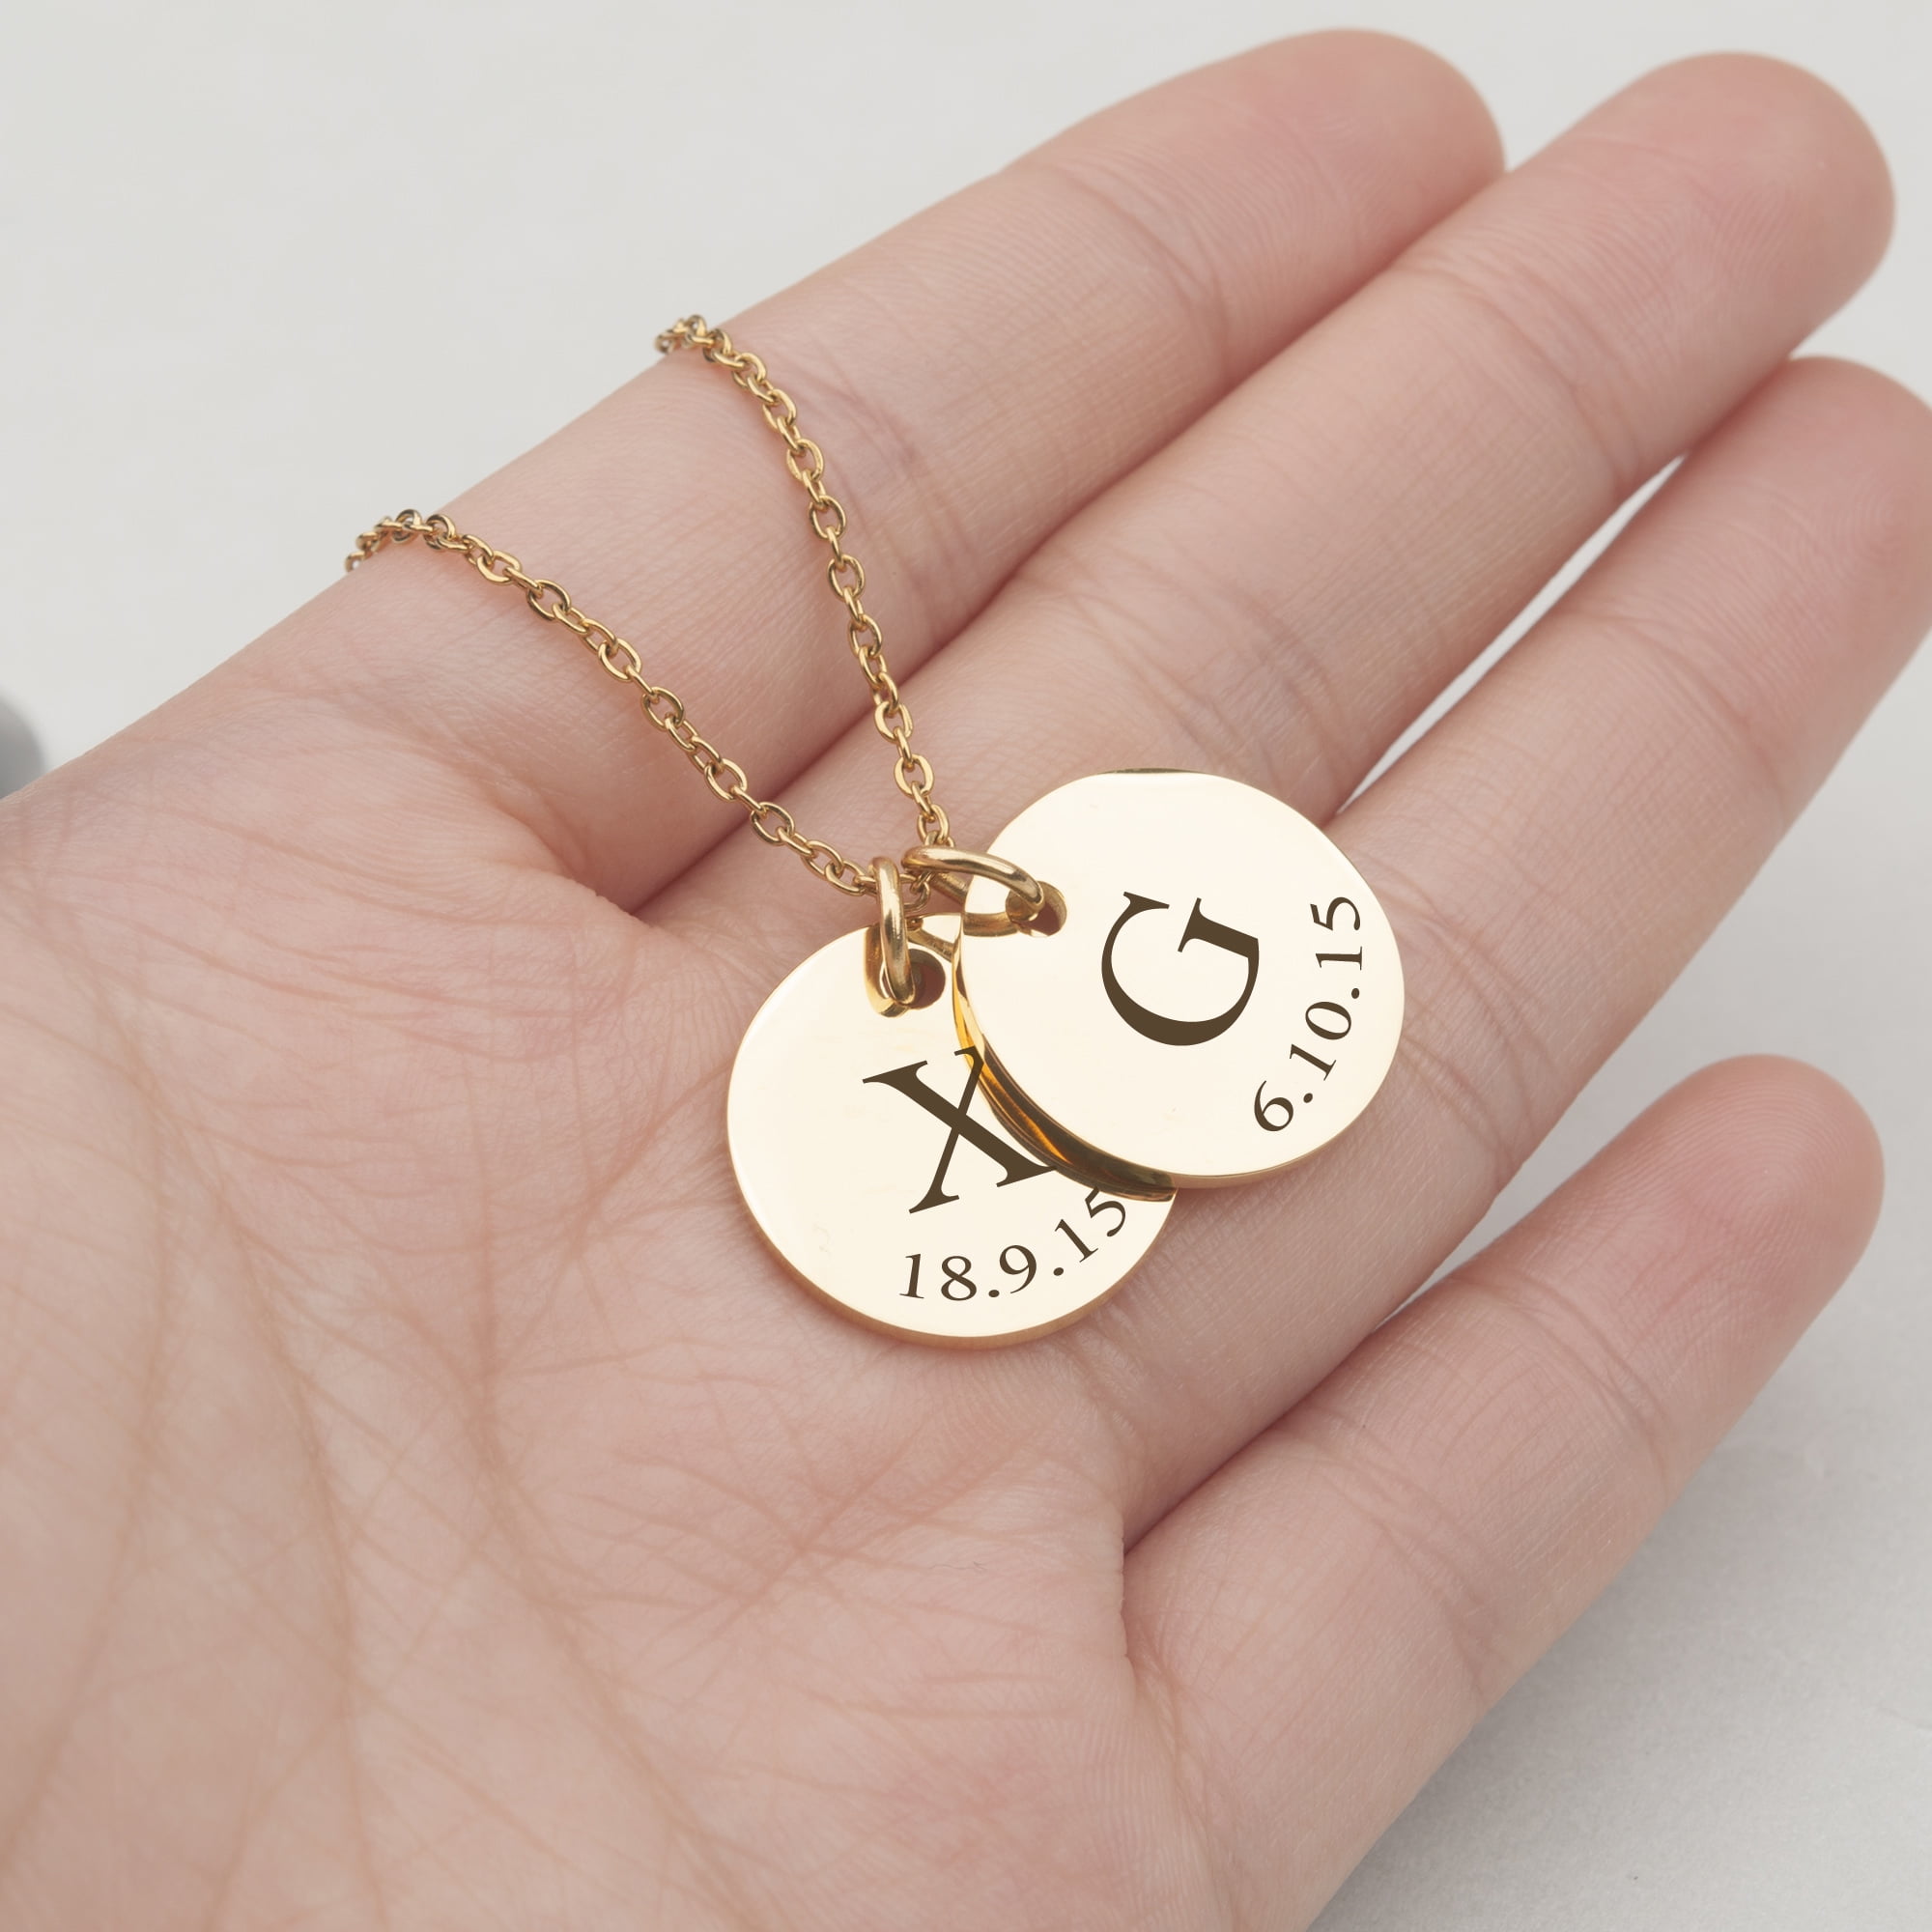 Mini Me Diamond Date - Personalized Name Necklace - Lola James Jewelry